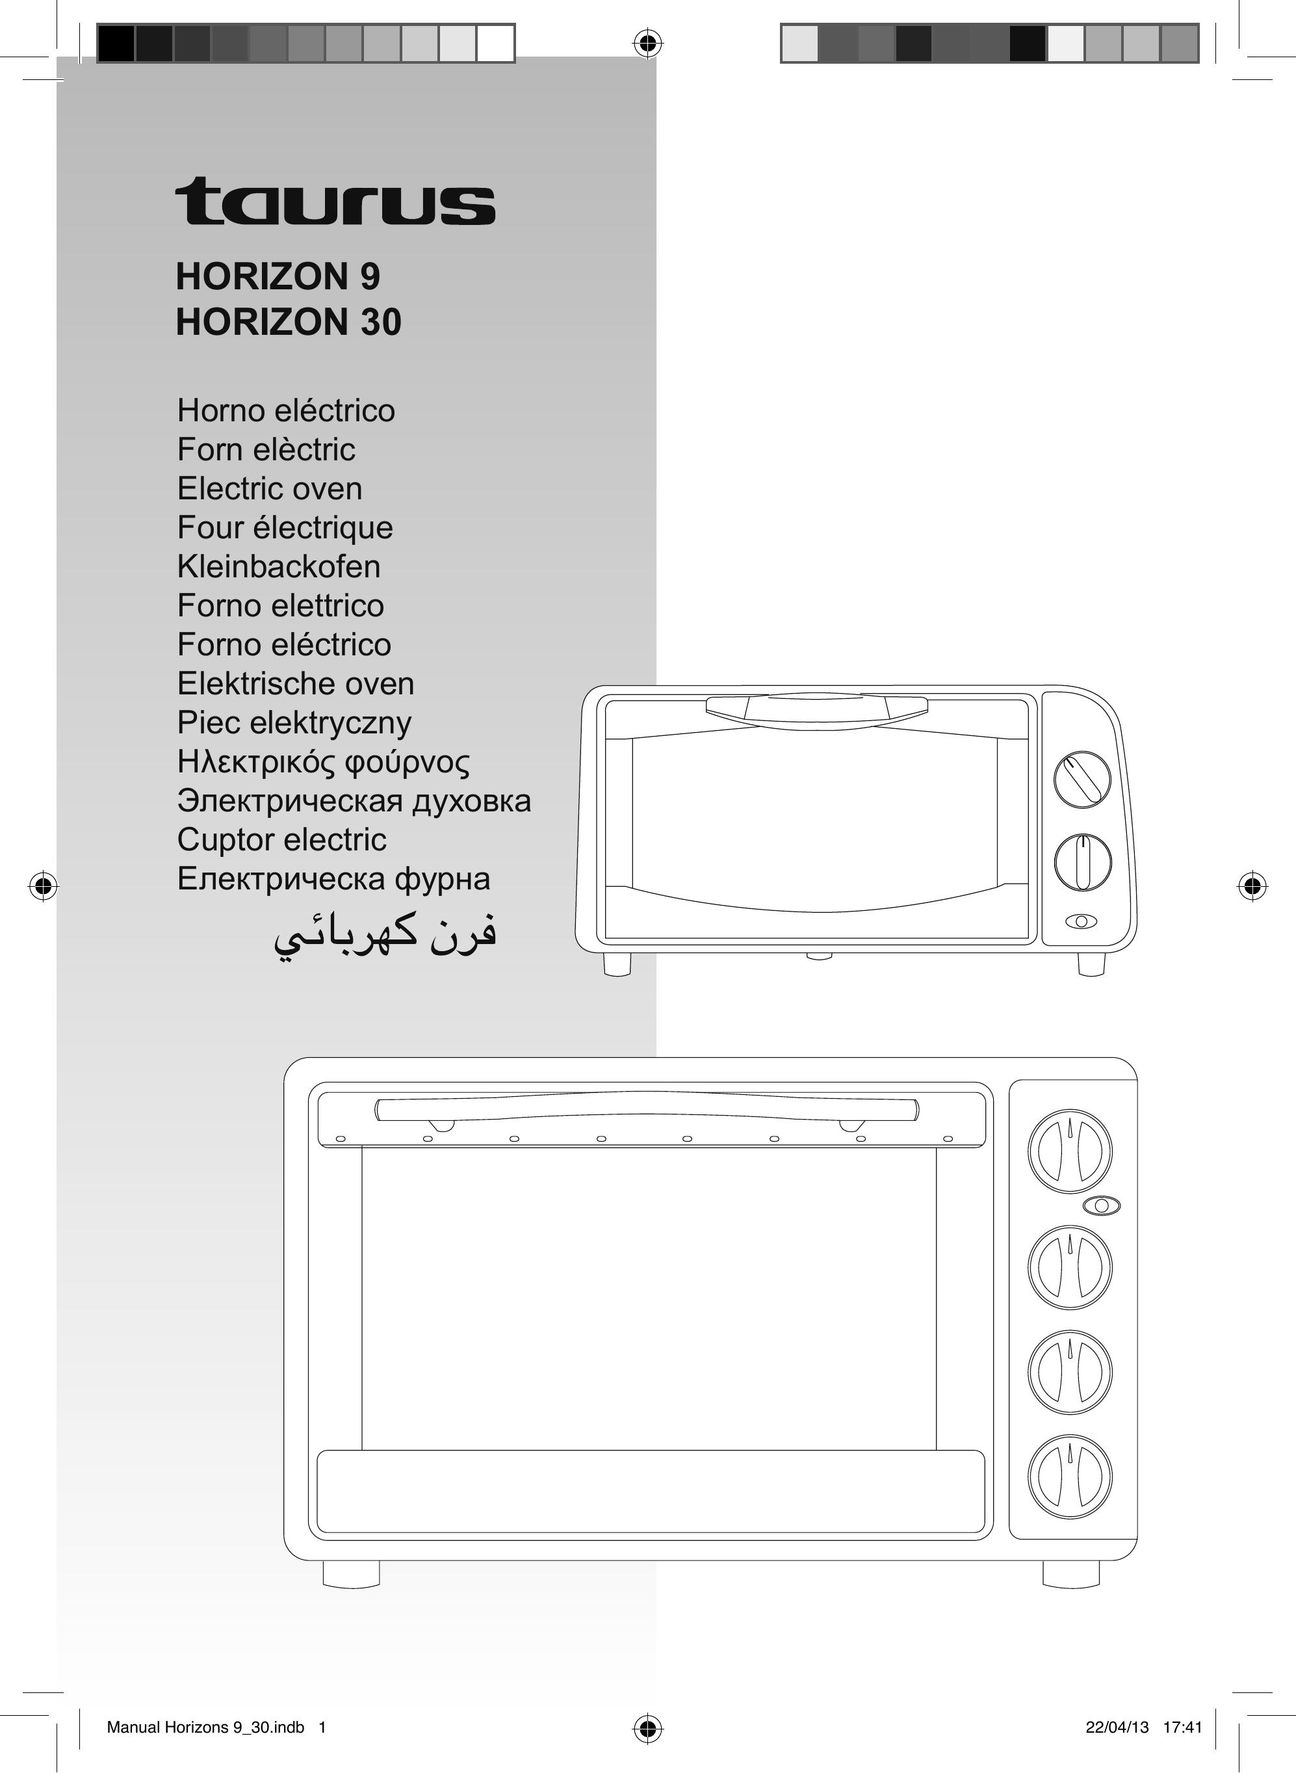 Taurus Group HORIZON 30 Oven User Manual